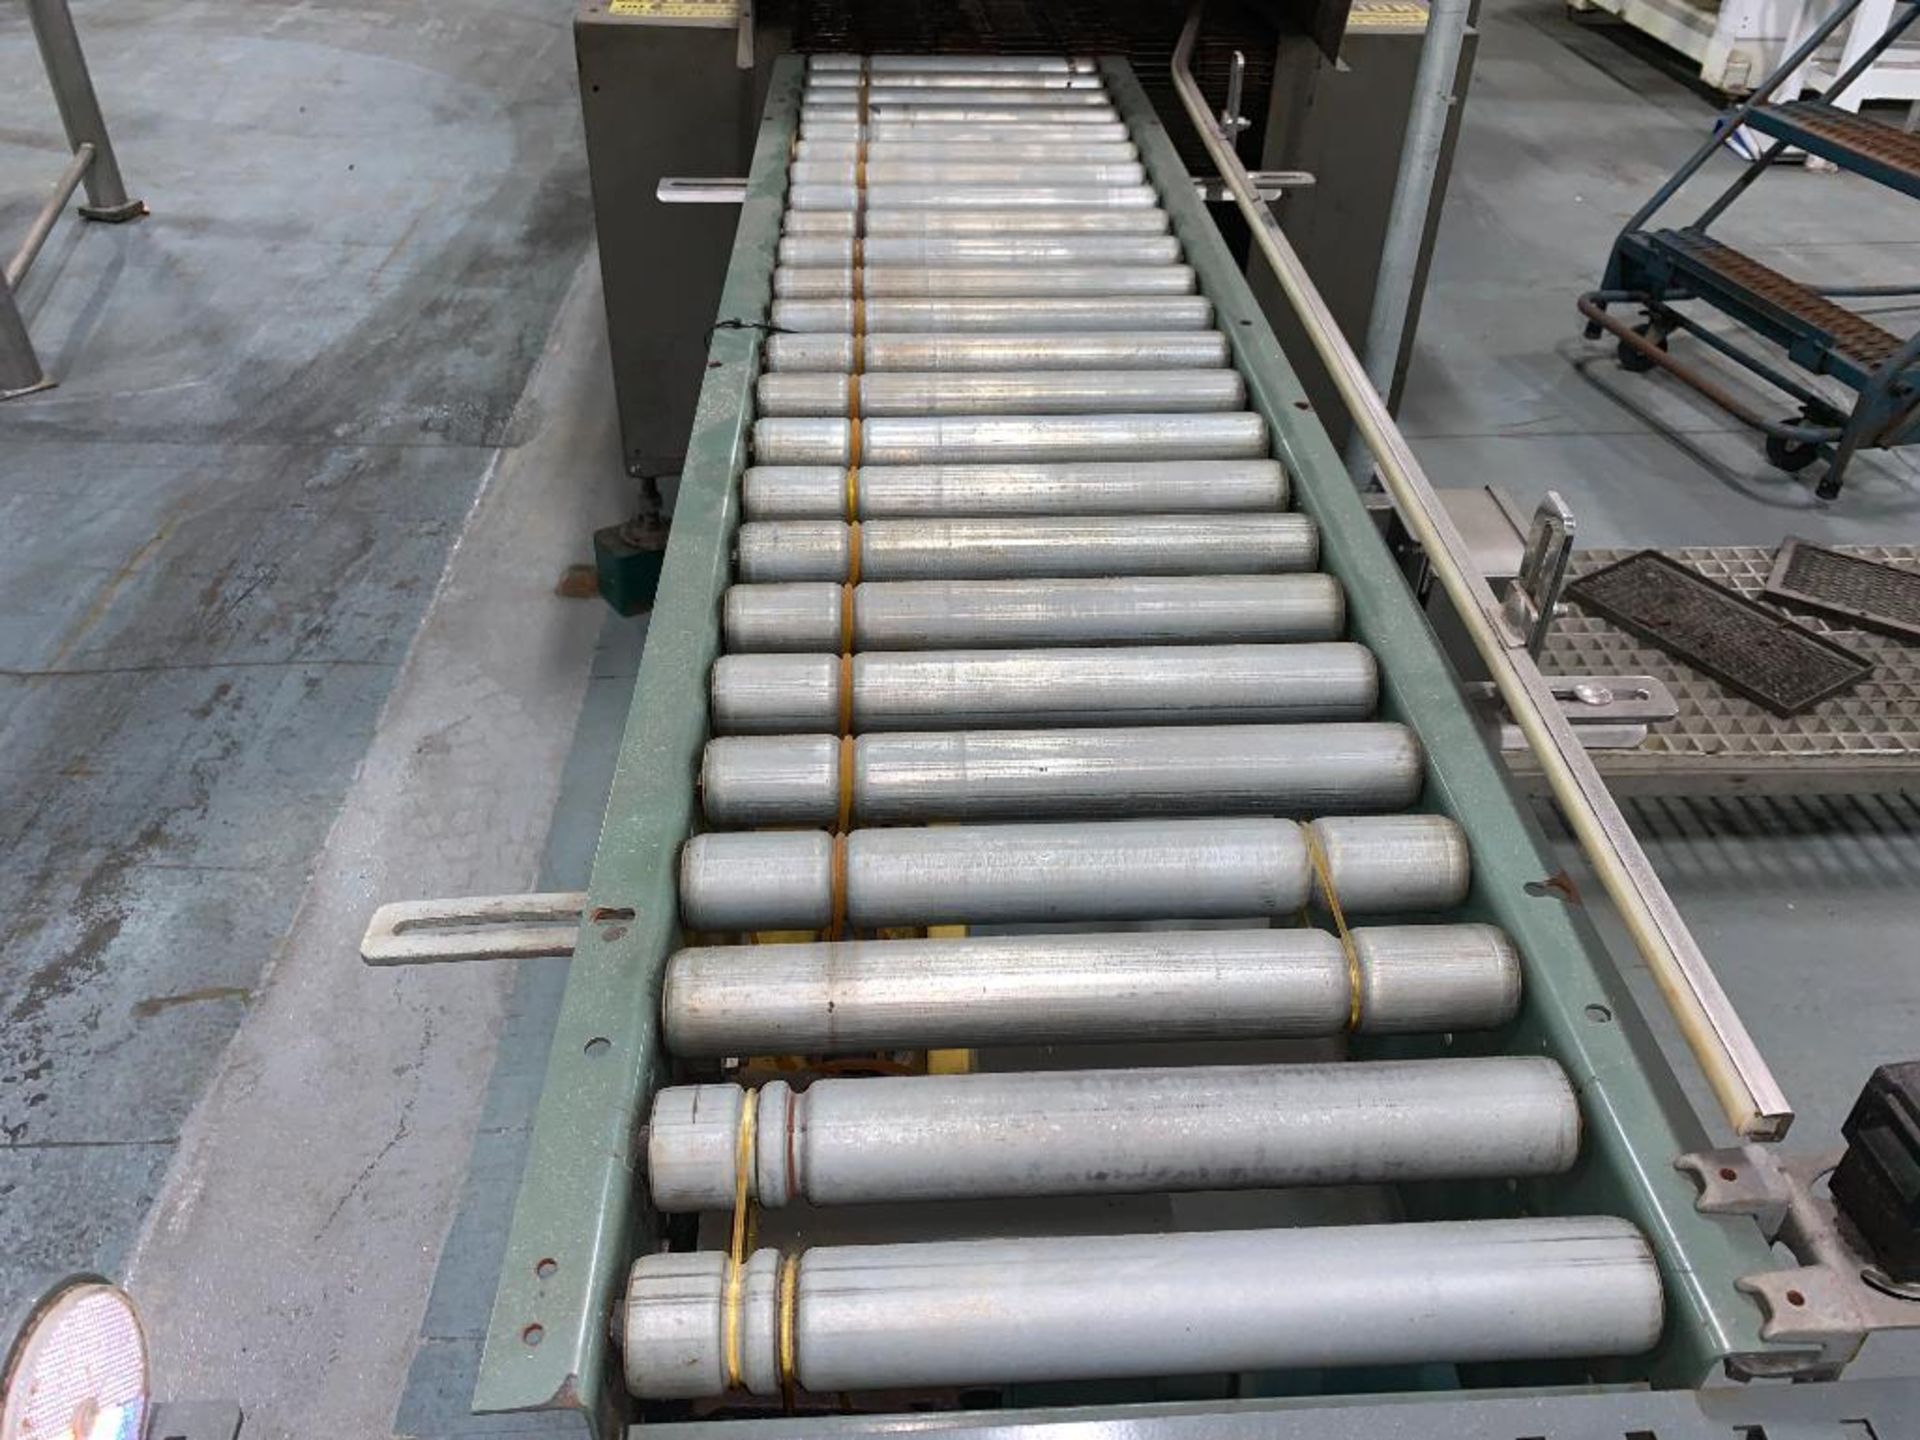 Hytrol power roller conveyor, 72 in. x 15 in. x 35 in. - Image 2 of 6